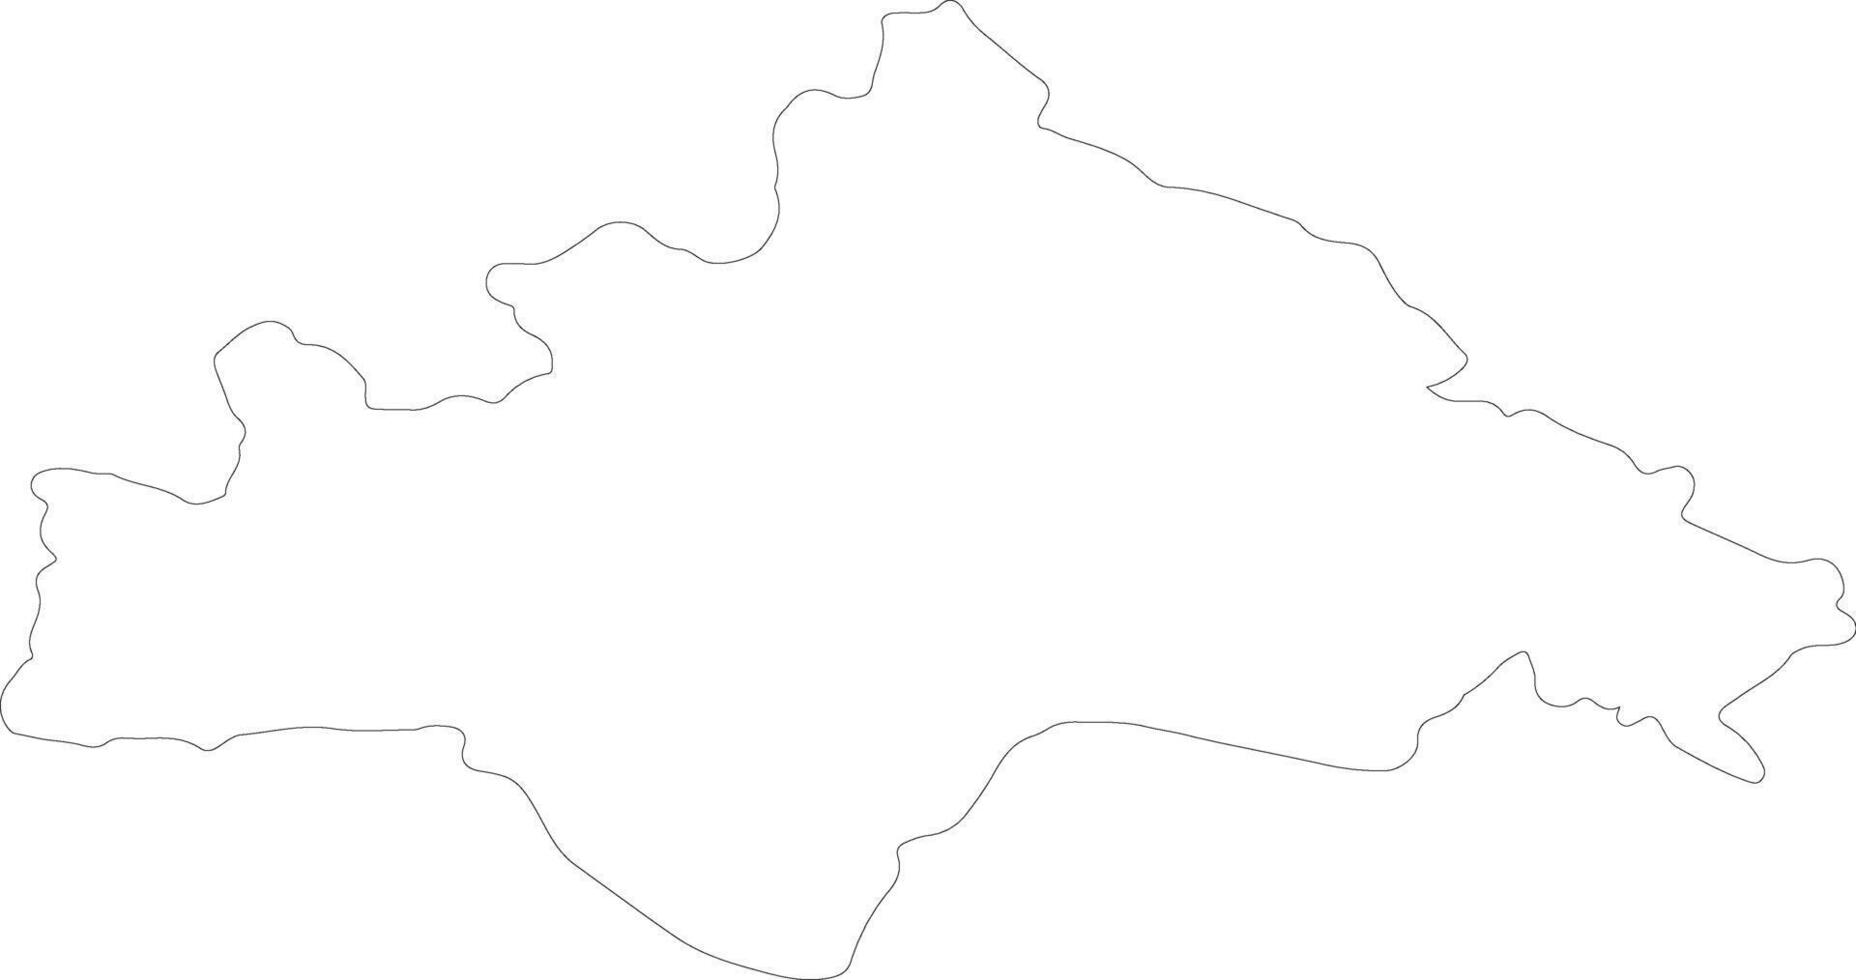 Sisacko-Moslavacka Croatia outline map vector